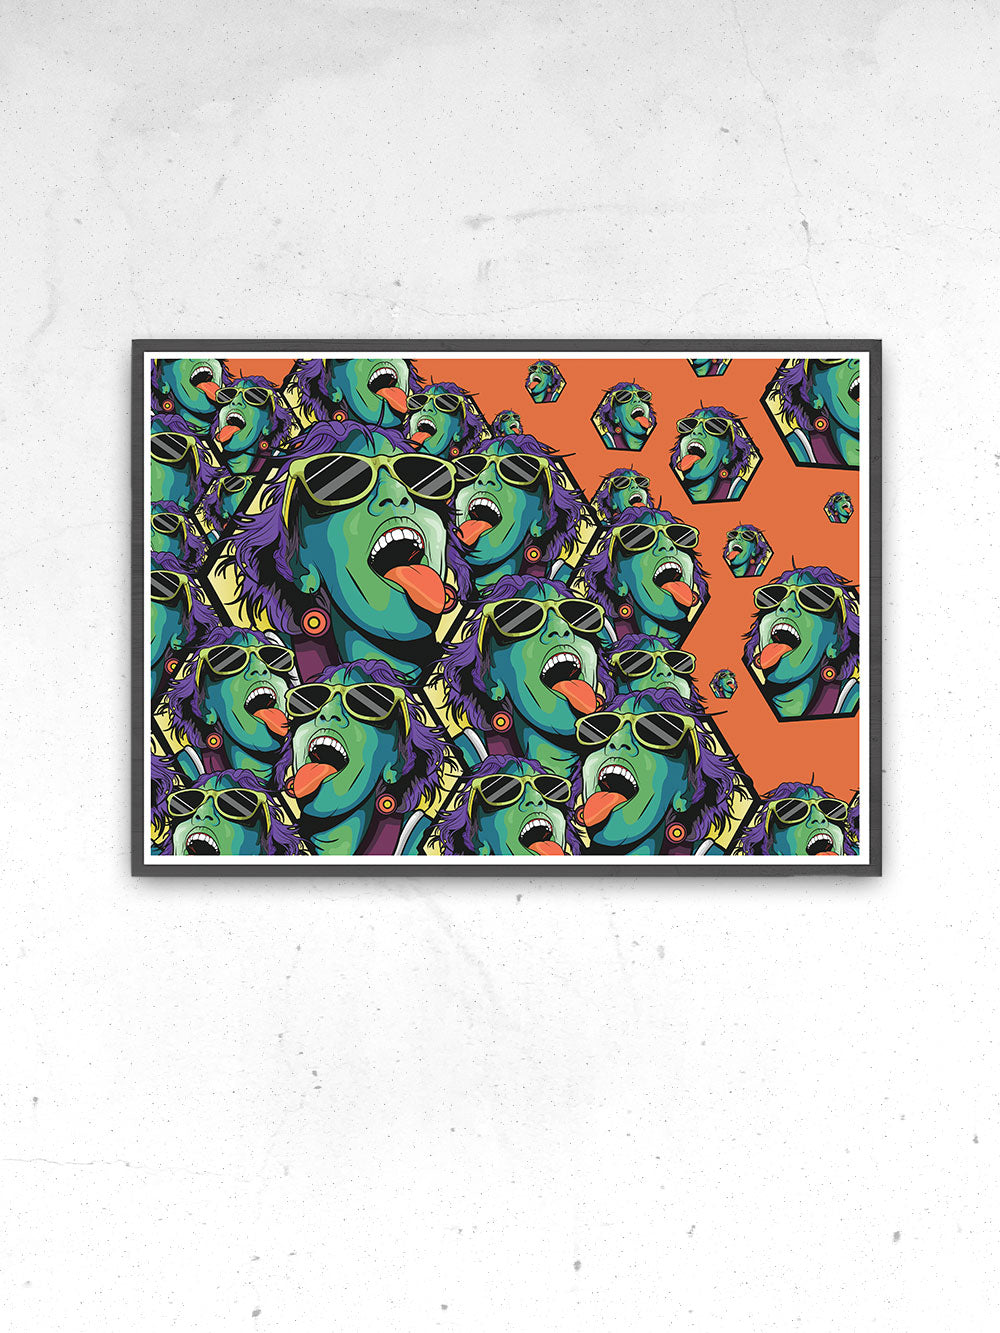 Rave Girl Orange Illustration Print in a frame on a wall